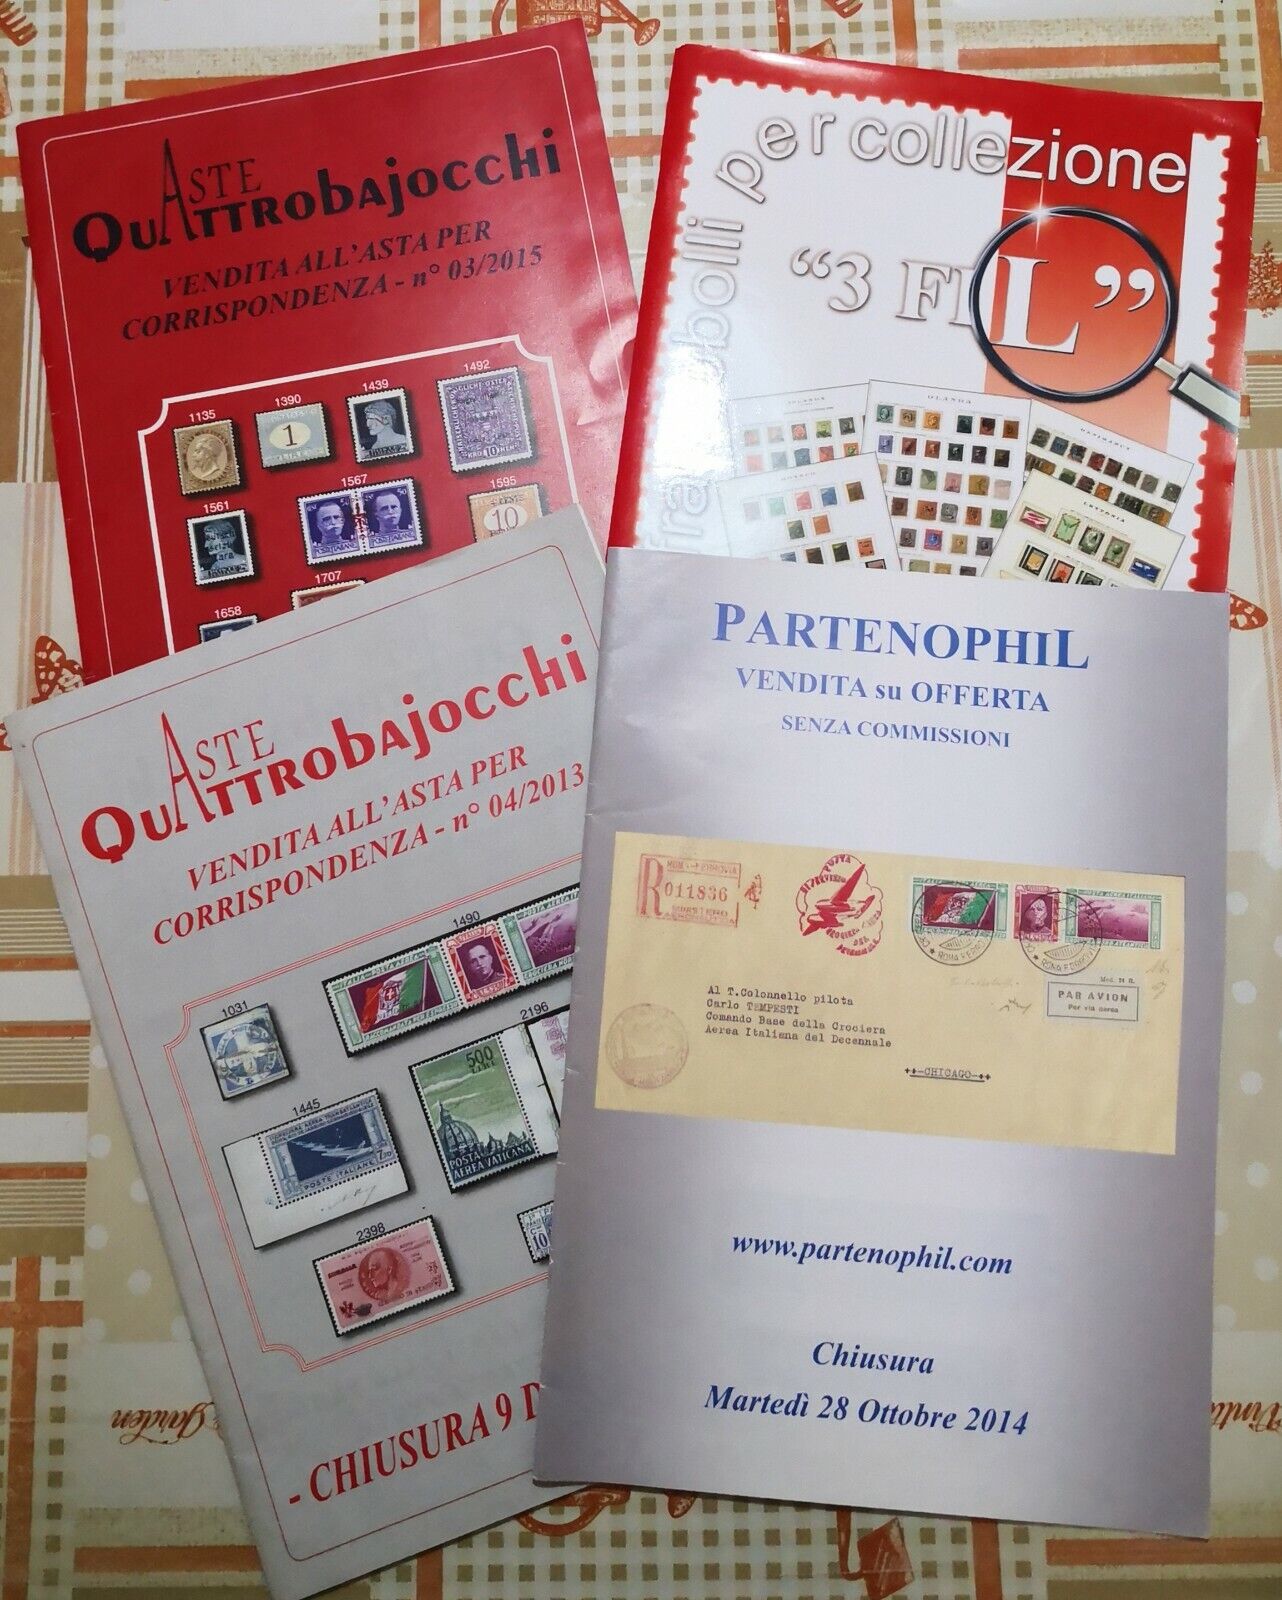 Aste Quattrobajocchi 4 volumi  di A.a.v.v,  2013,  Quattrobajocchi-F